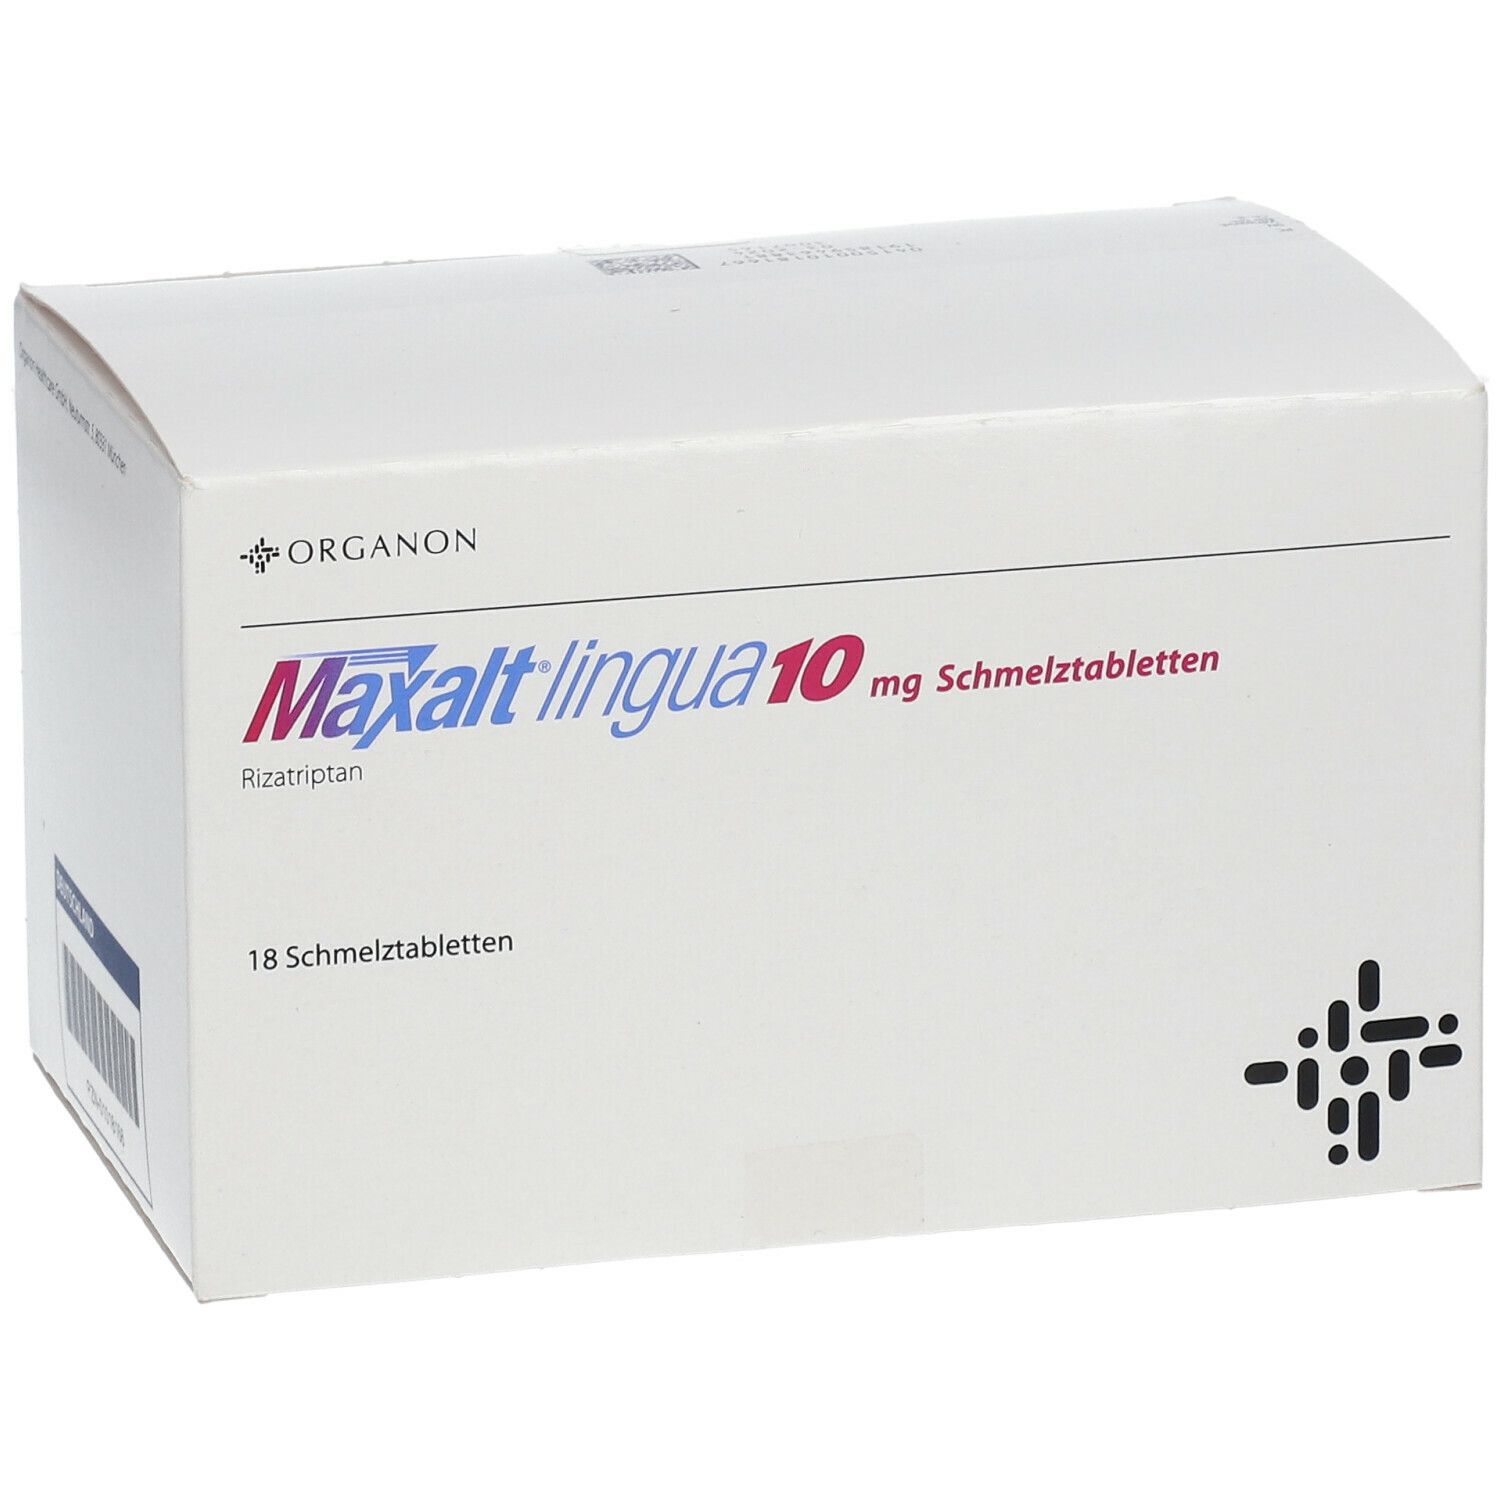 Maxalt® lingua 10 mg